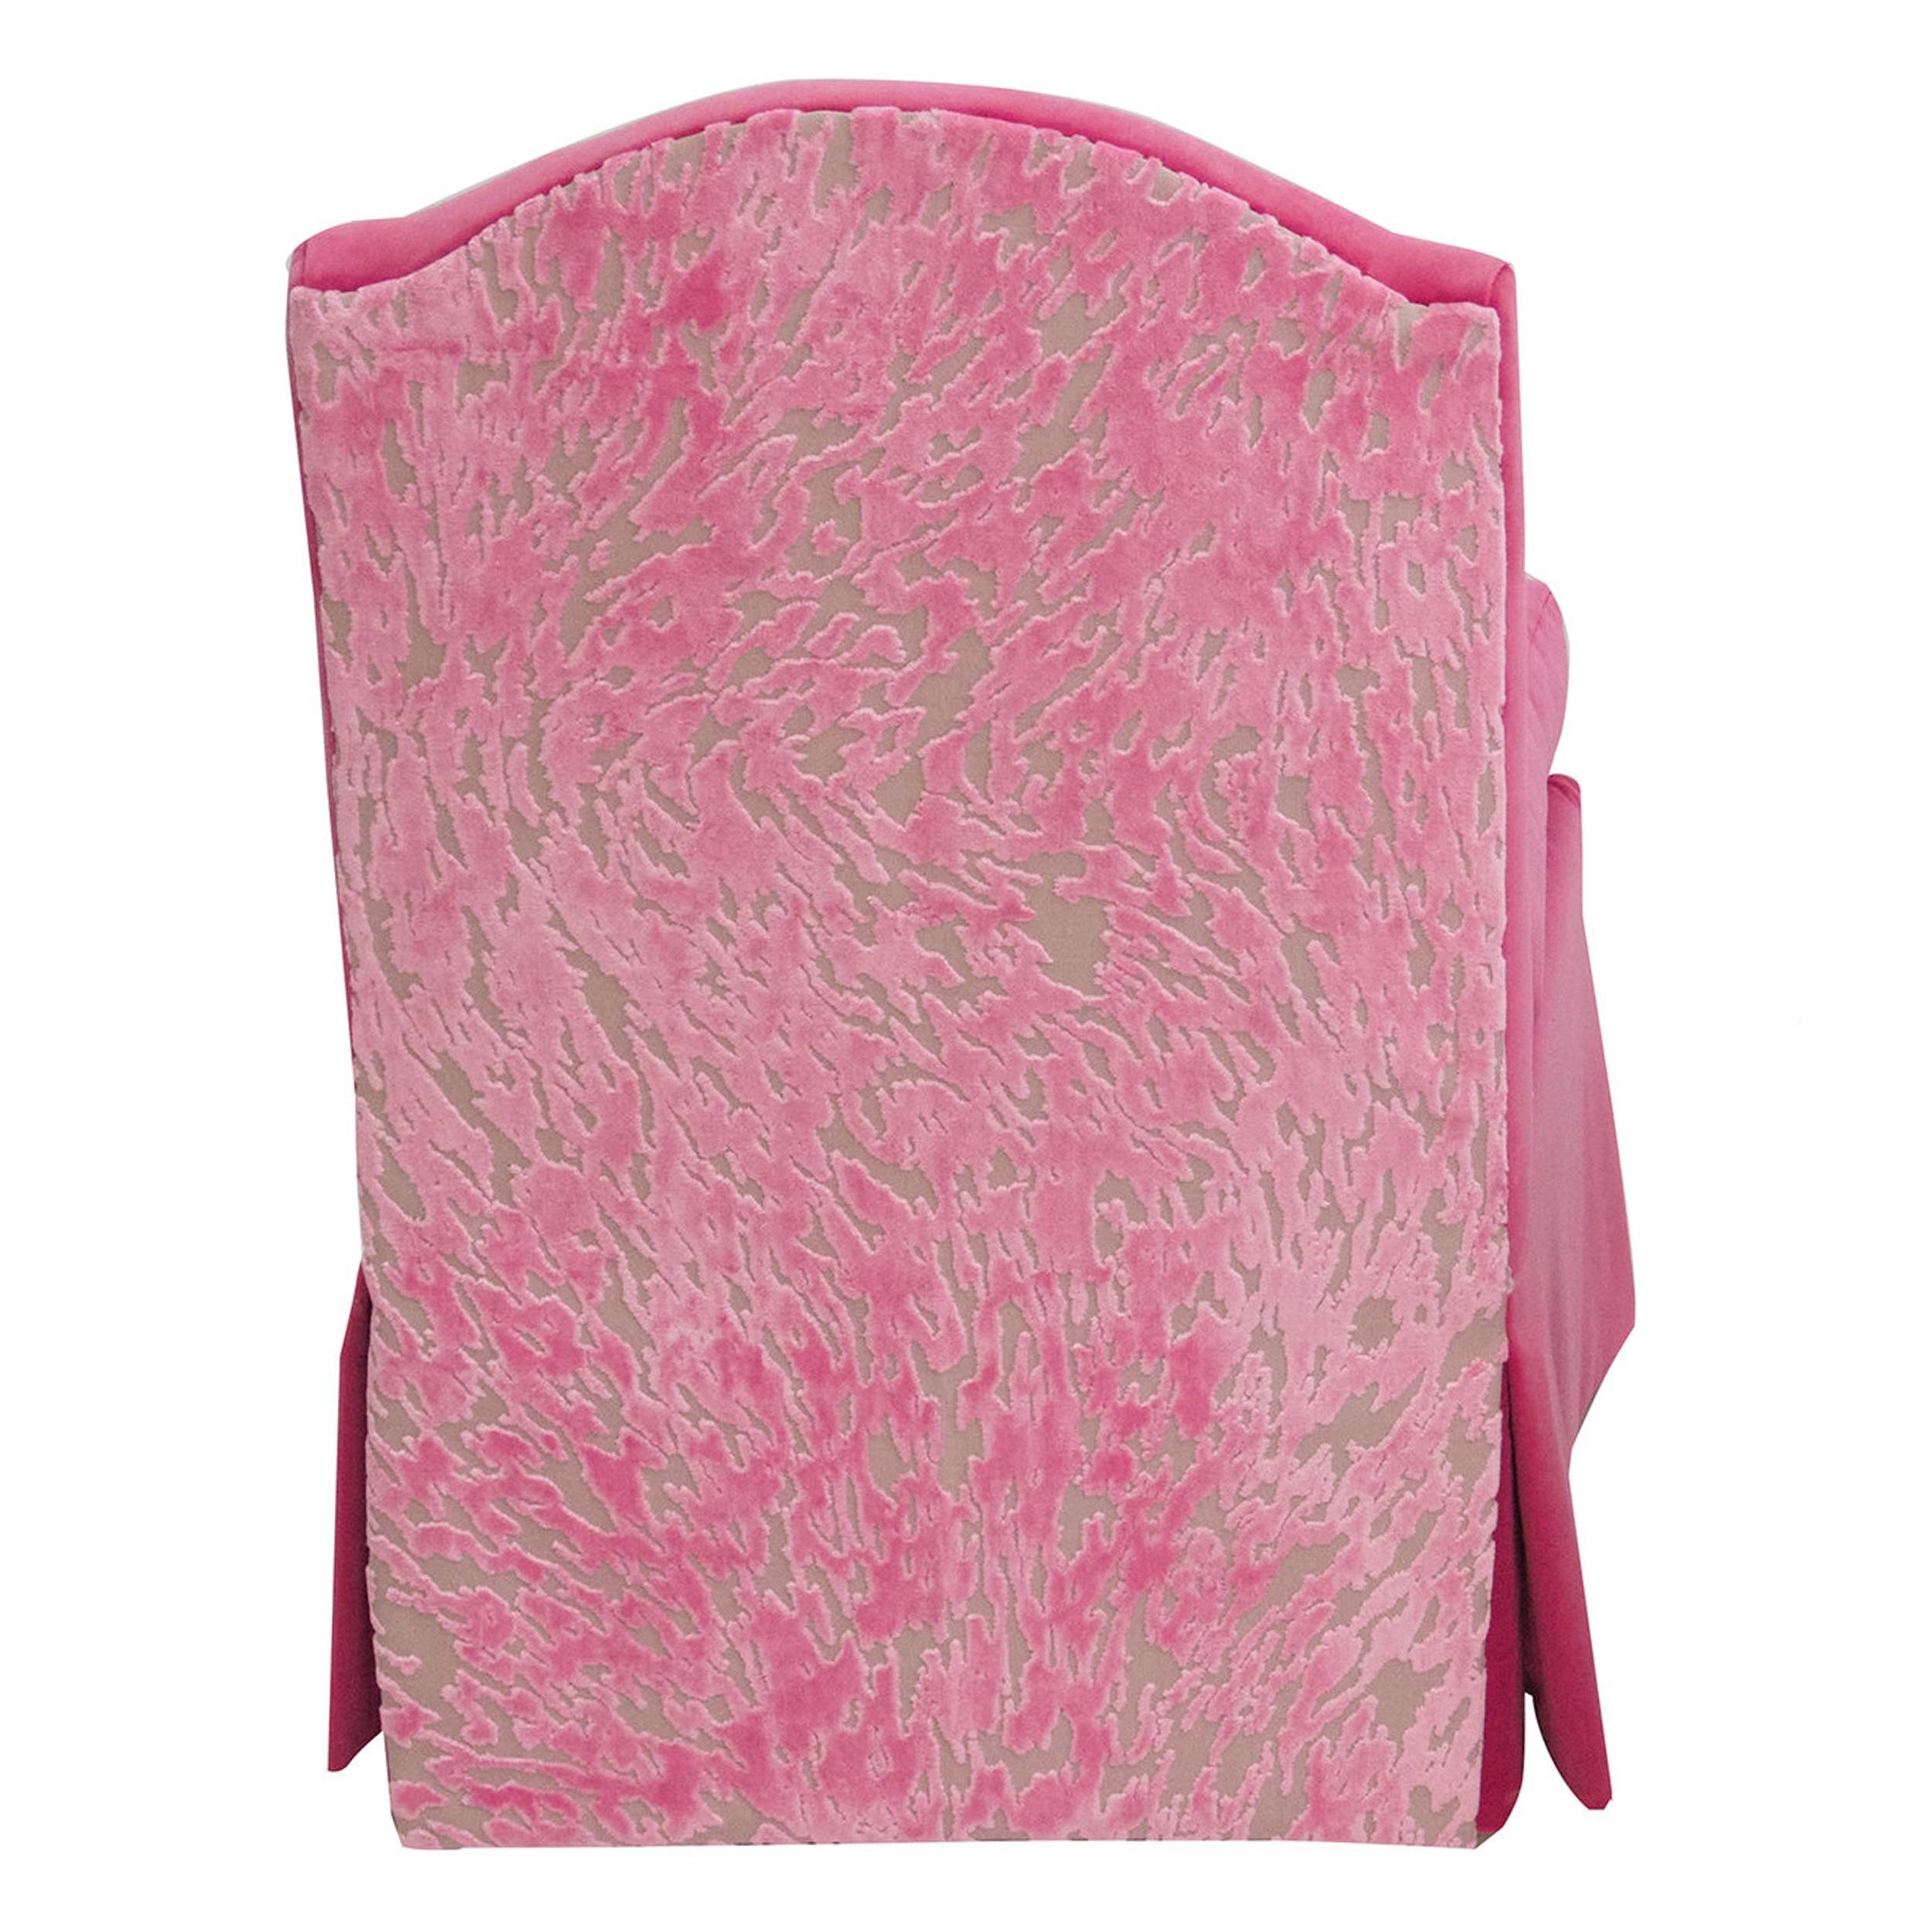 pink velvet chair under $100